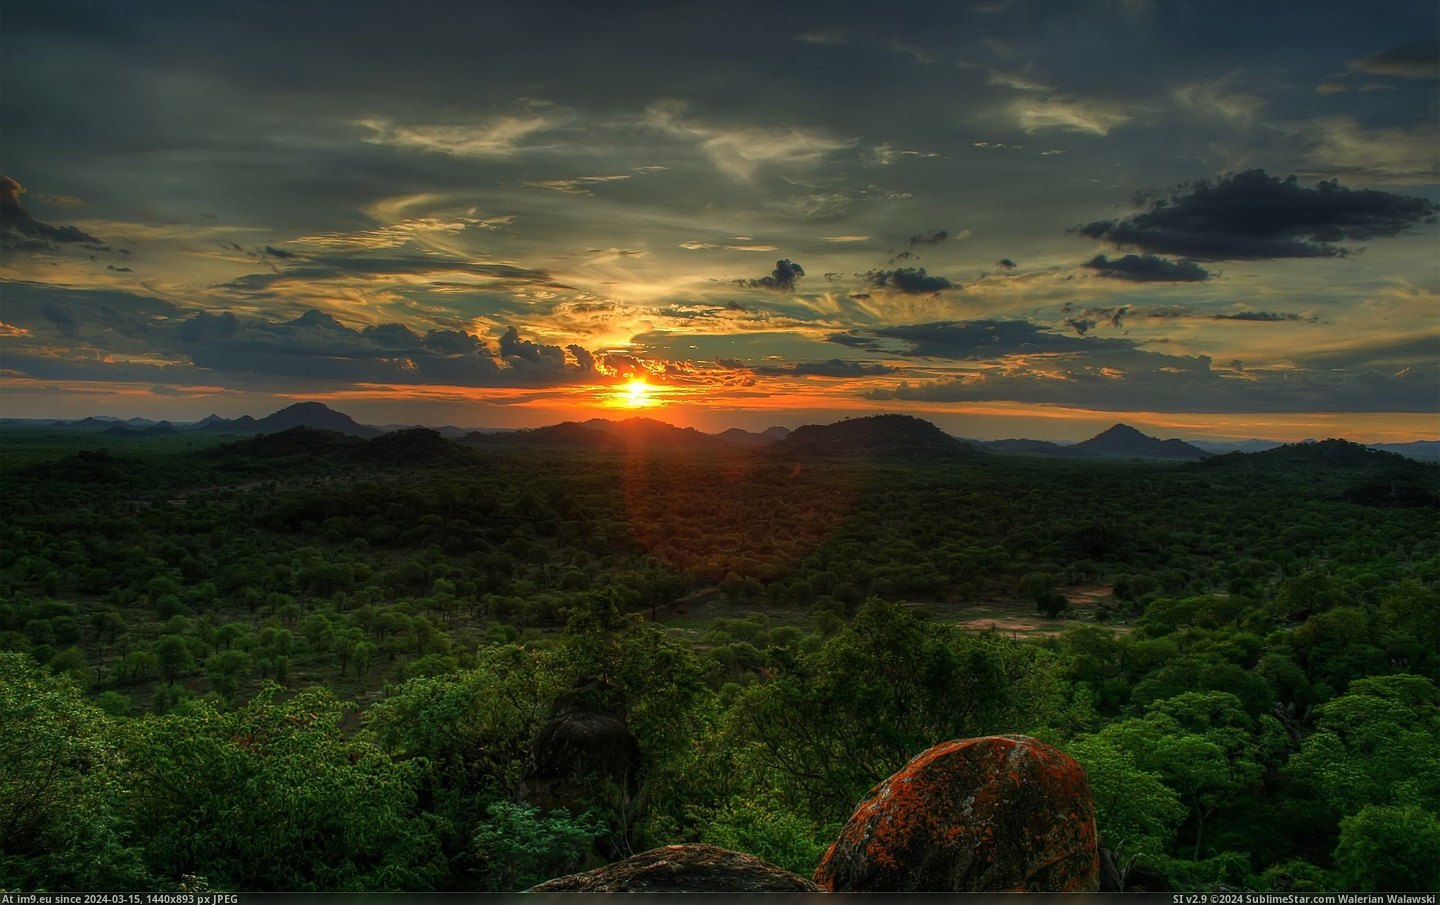 #Sunset #2560x1600 #Zimbabwe #African [Earthporn] African Sunset, Zimbabwe [2560x1600] Pic. (Изображение из альбом My r/EARTHPORN favs))